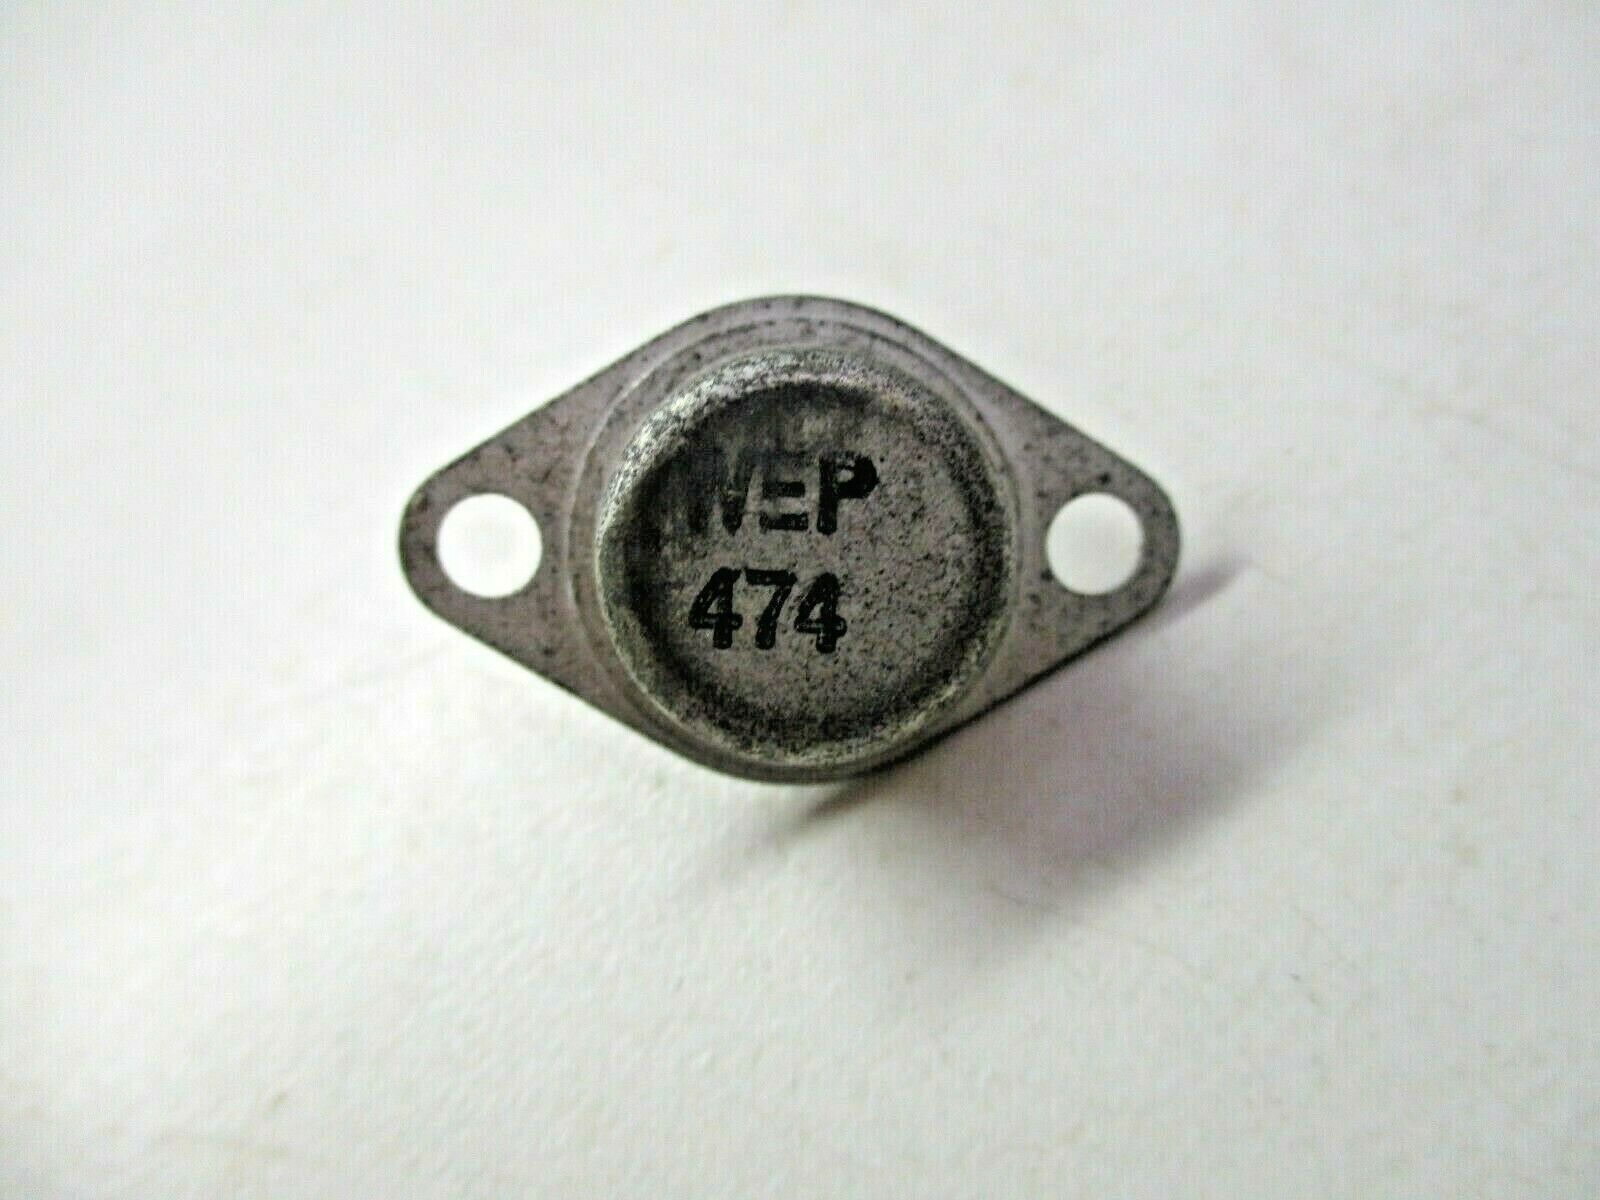 WEP 474 Vintage Transistor 2 Pin 15/16 inch Screw Spread